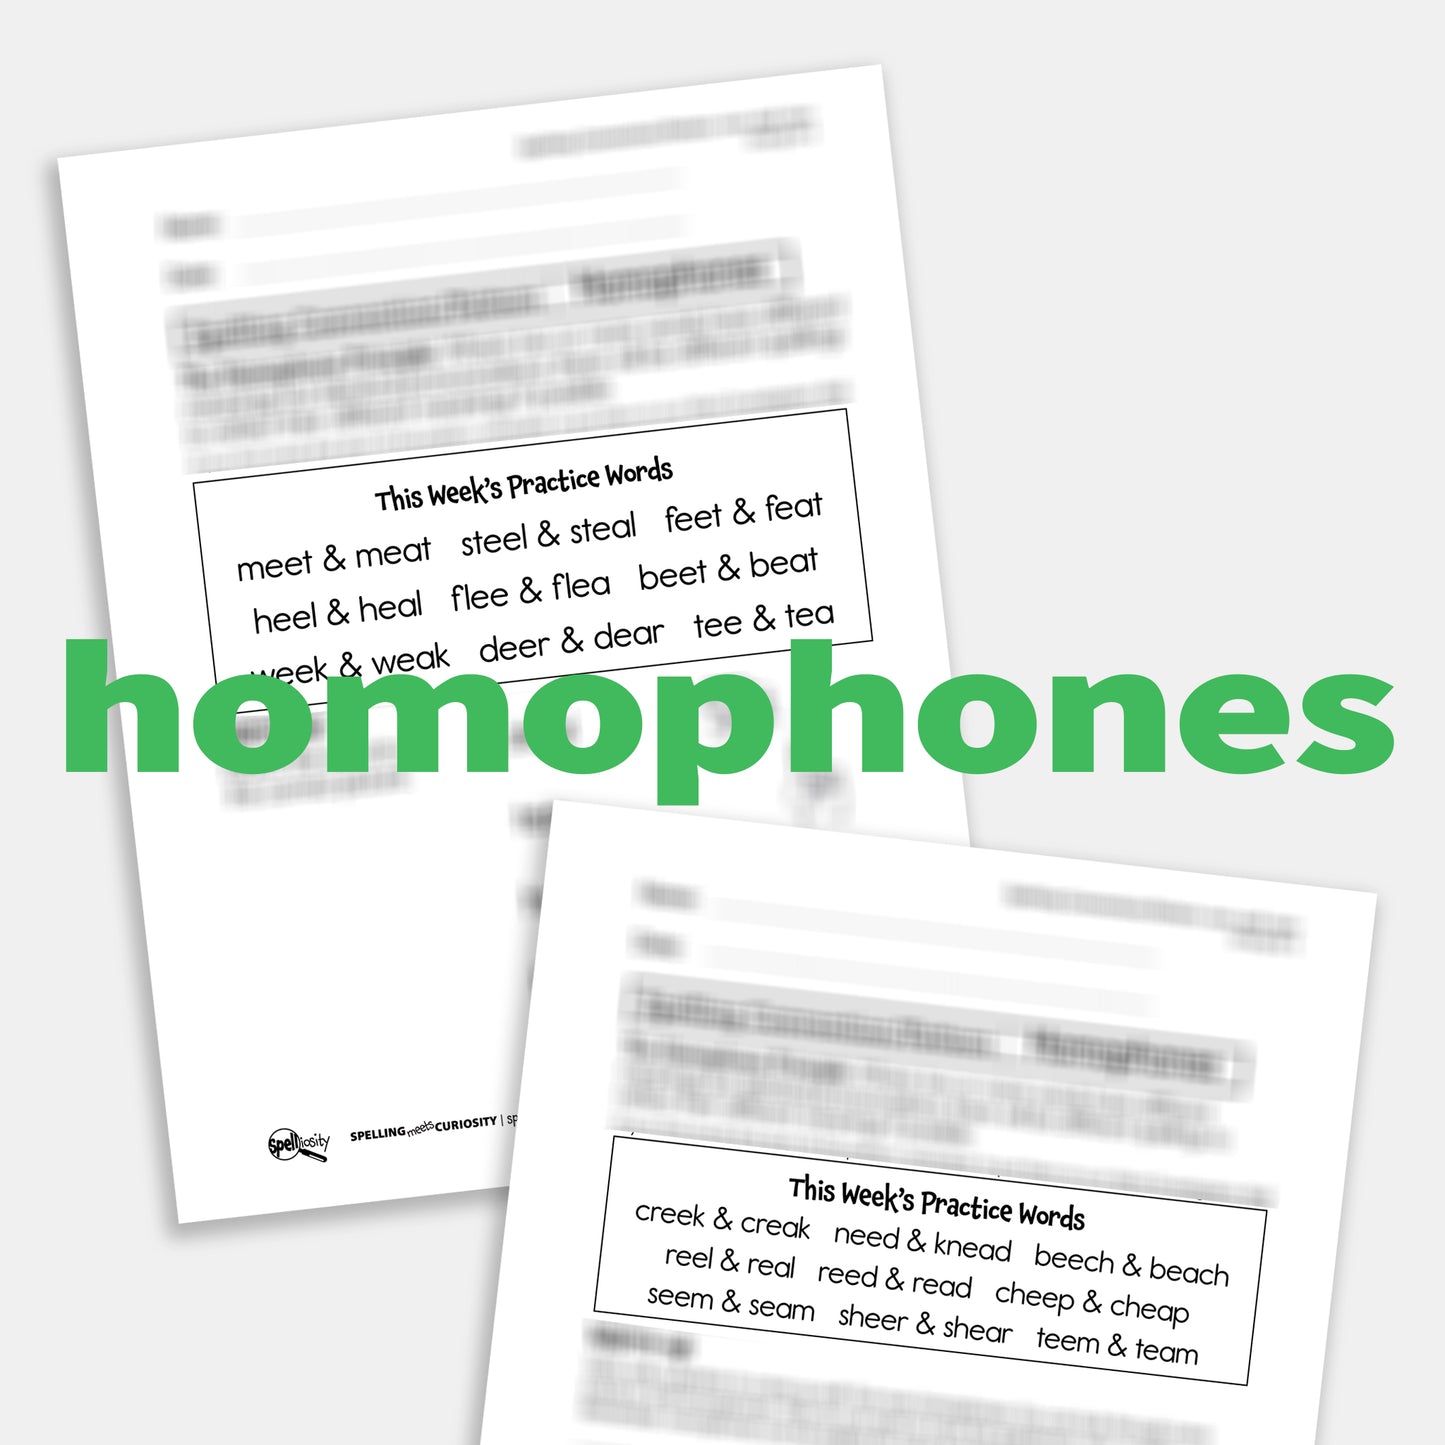 Homophones using <ee> & <ea> Spelling Convention